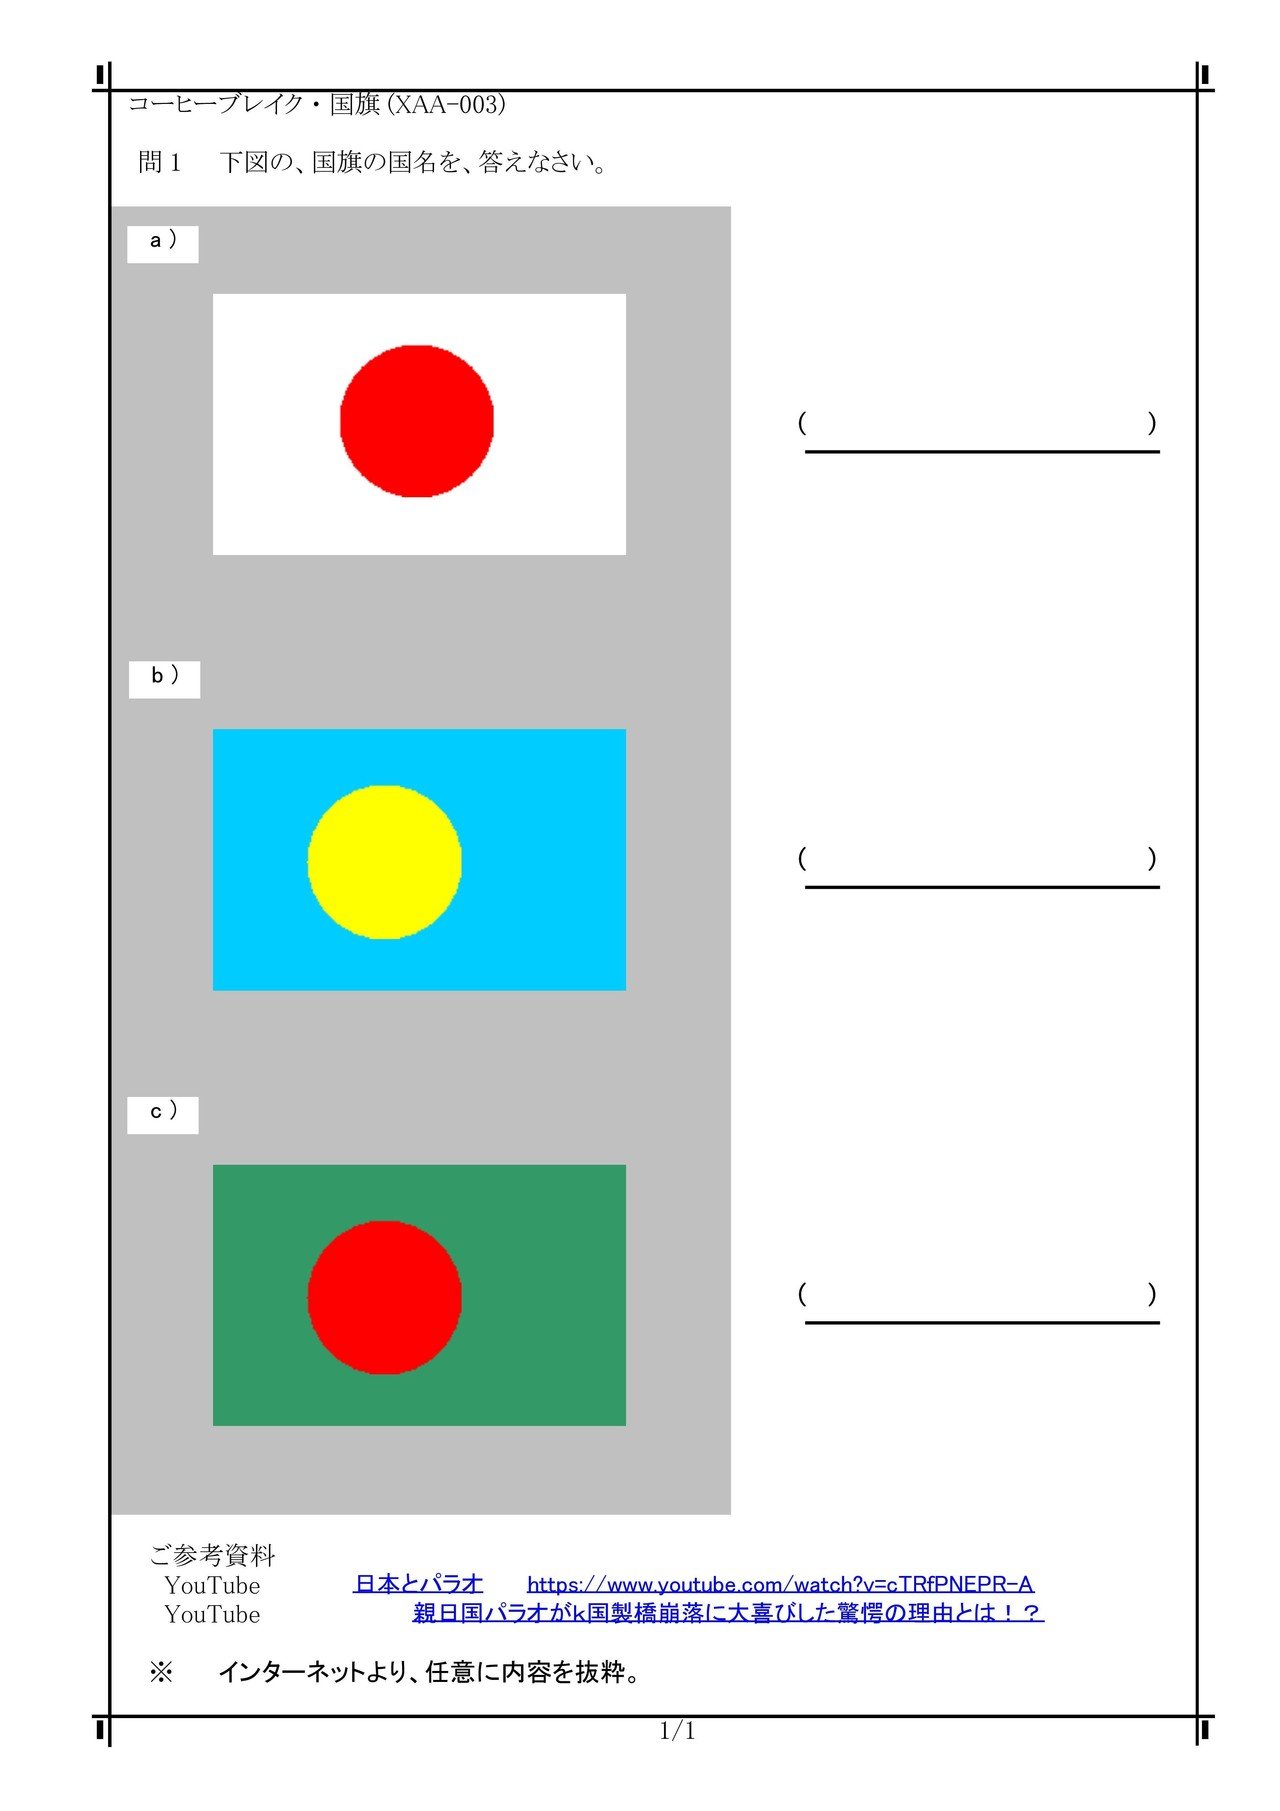 Xaa 003 コーヒーブレイク 国旗 日本国 パラオ共和国 バングラデシュ人民共和国 日本 パラオ バングラデシュ に関する 問題と解答です Xaa 003 電気の問題集研究所 Dmk Note